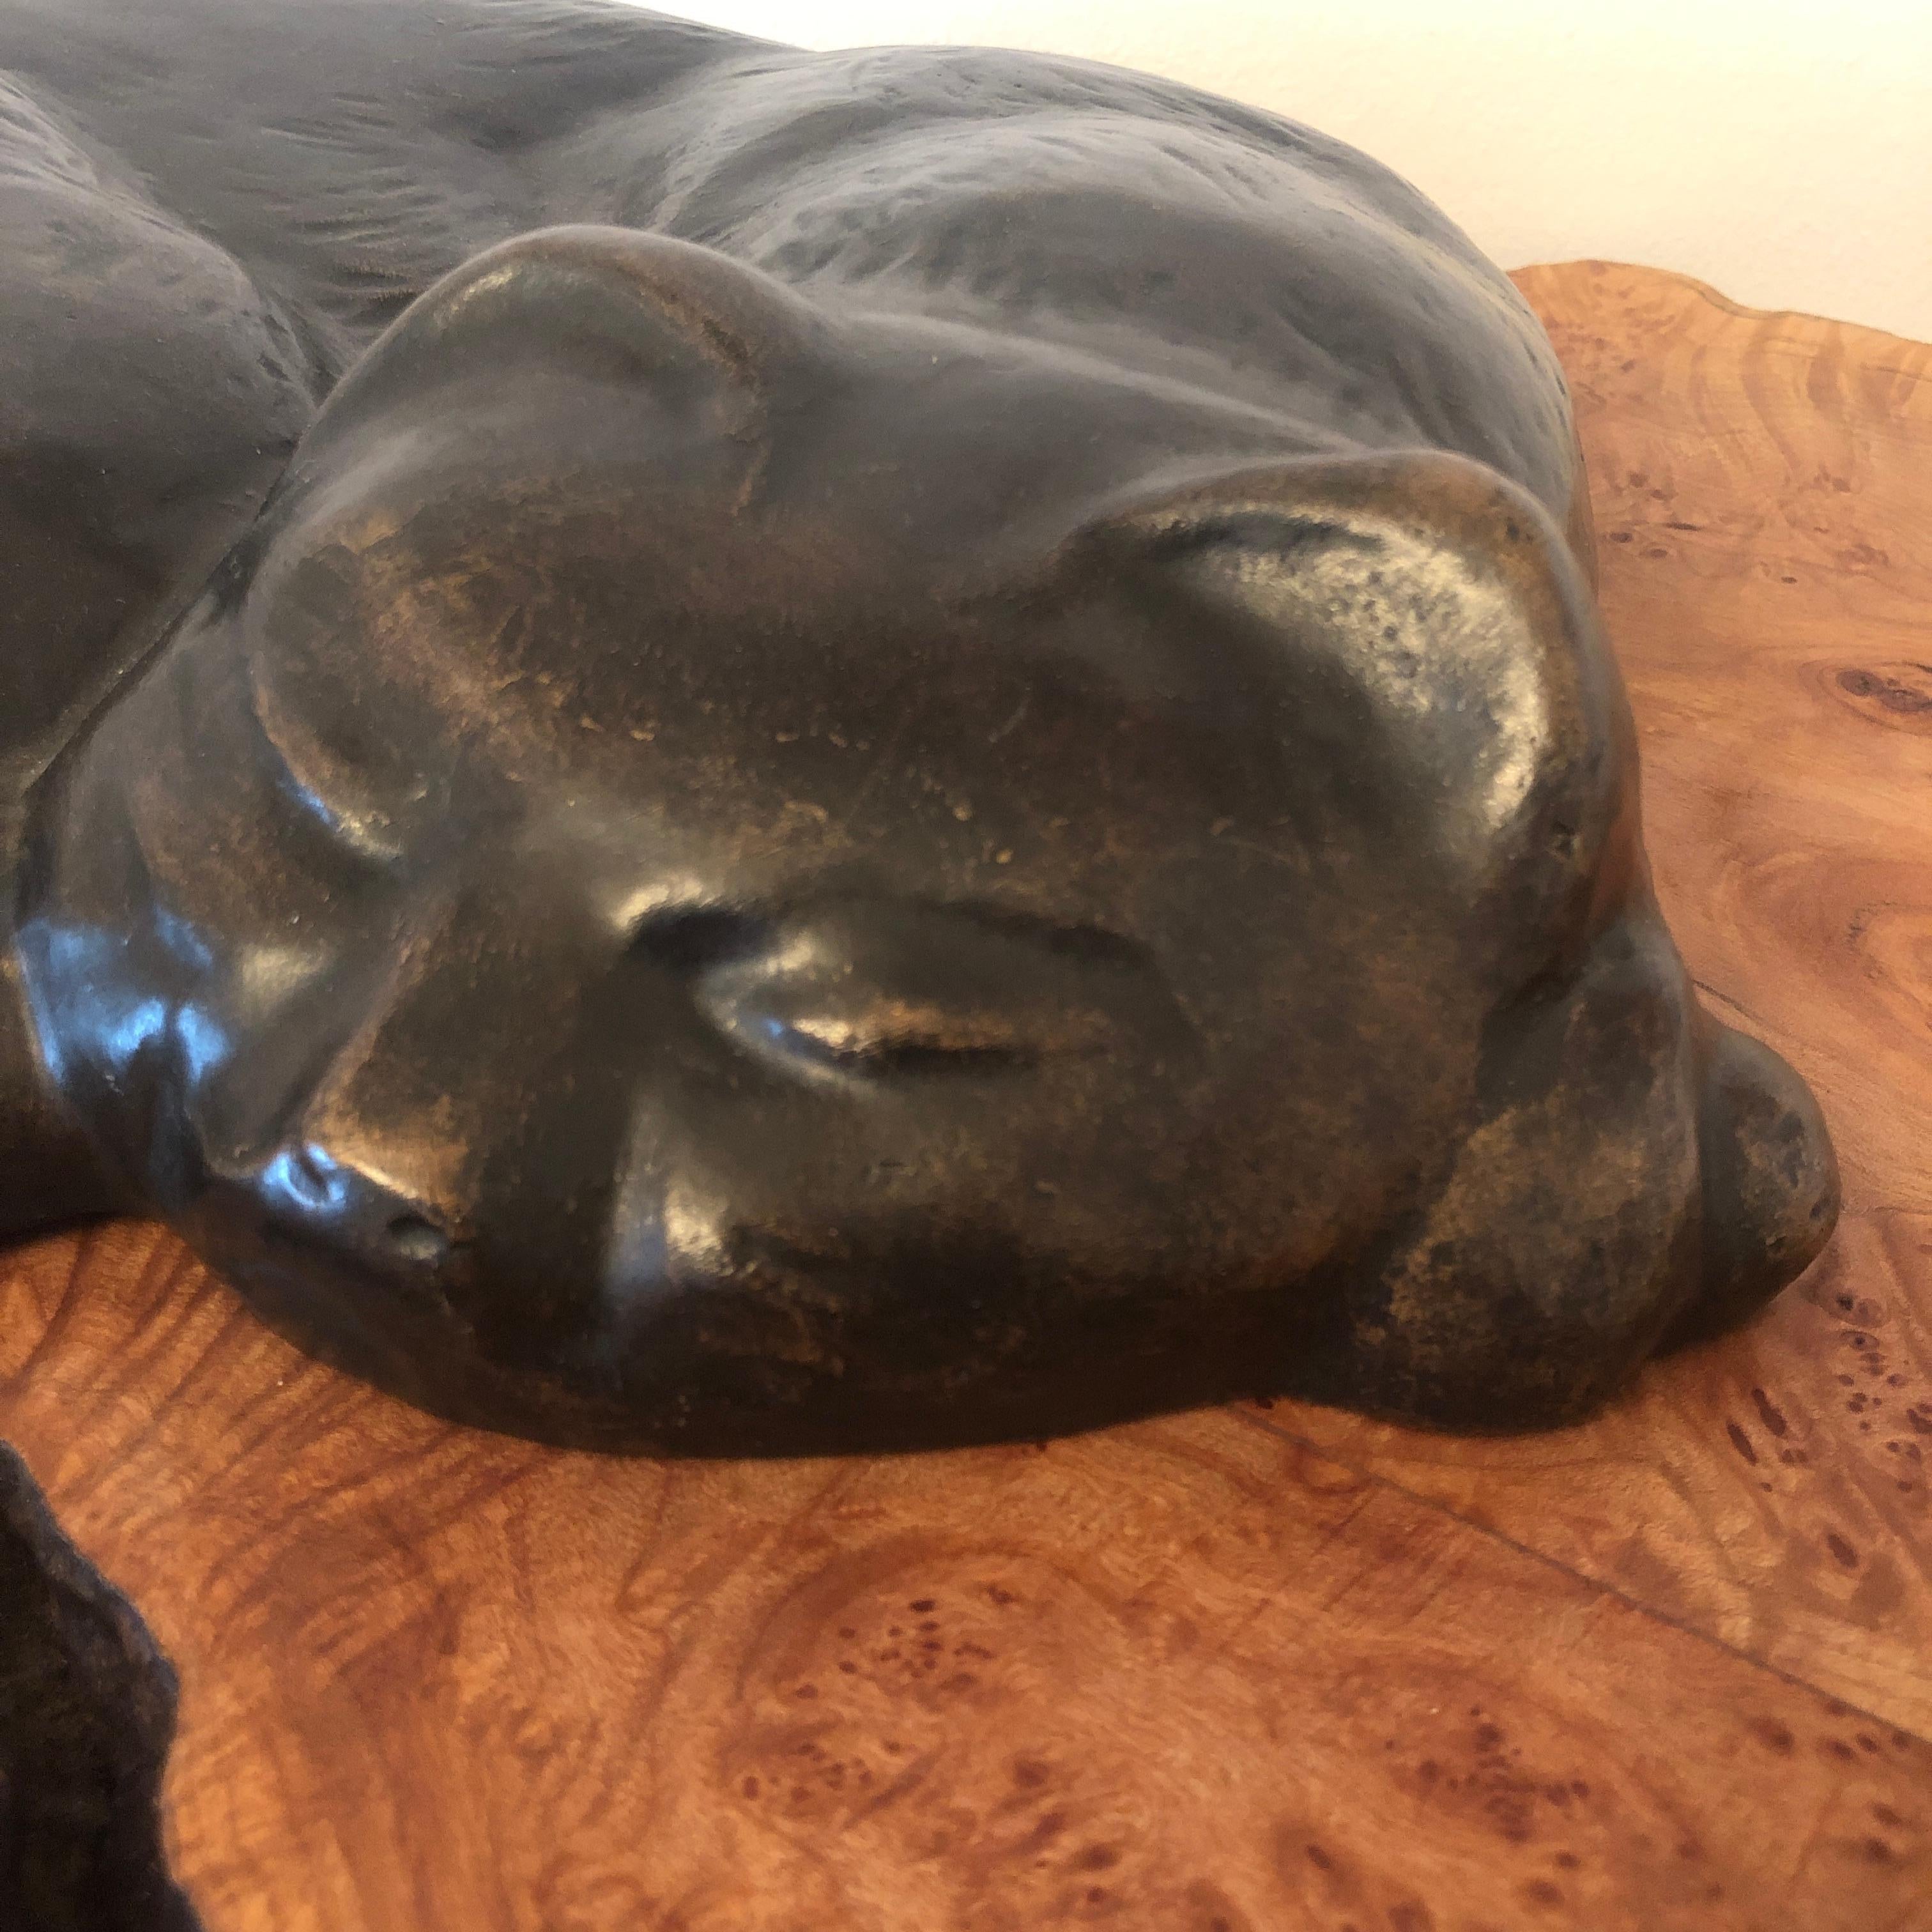 Schlafende Katze (Sleeping Cat) - Bronze, Sculpture, Scholar of Henri Matisse - Gold Figurative Sculpture by Marg Moll